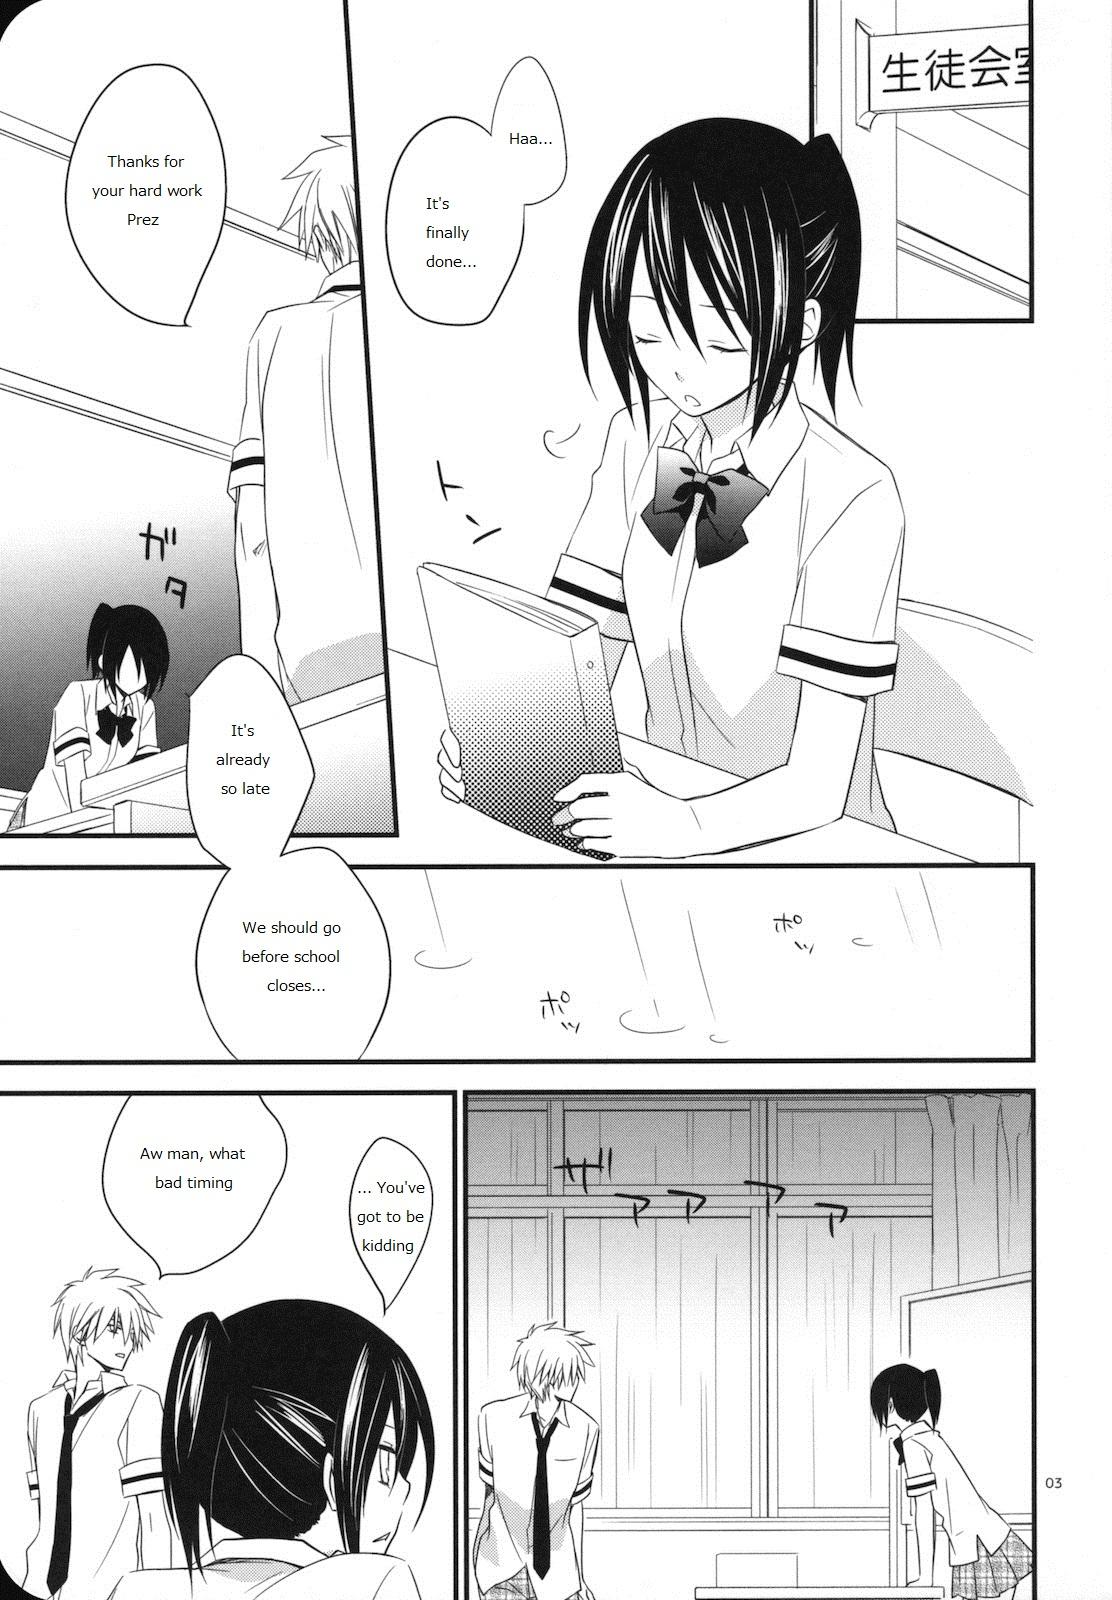 4some elle*2 - Kaichou wa maid-sama Public Nudity - Page 2